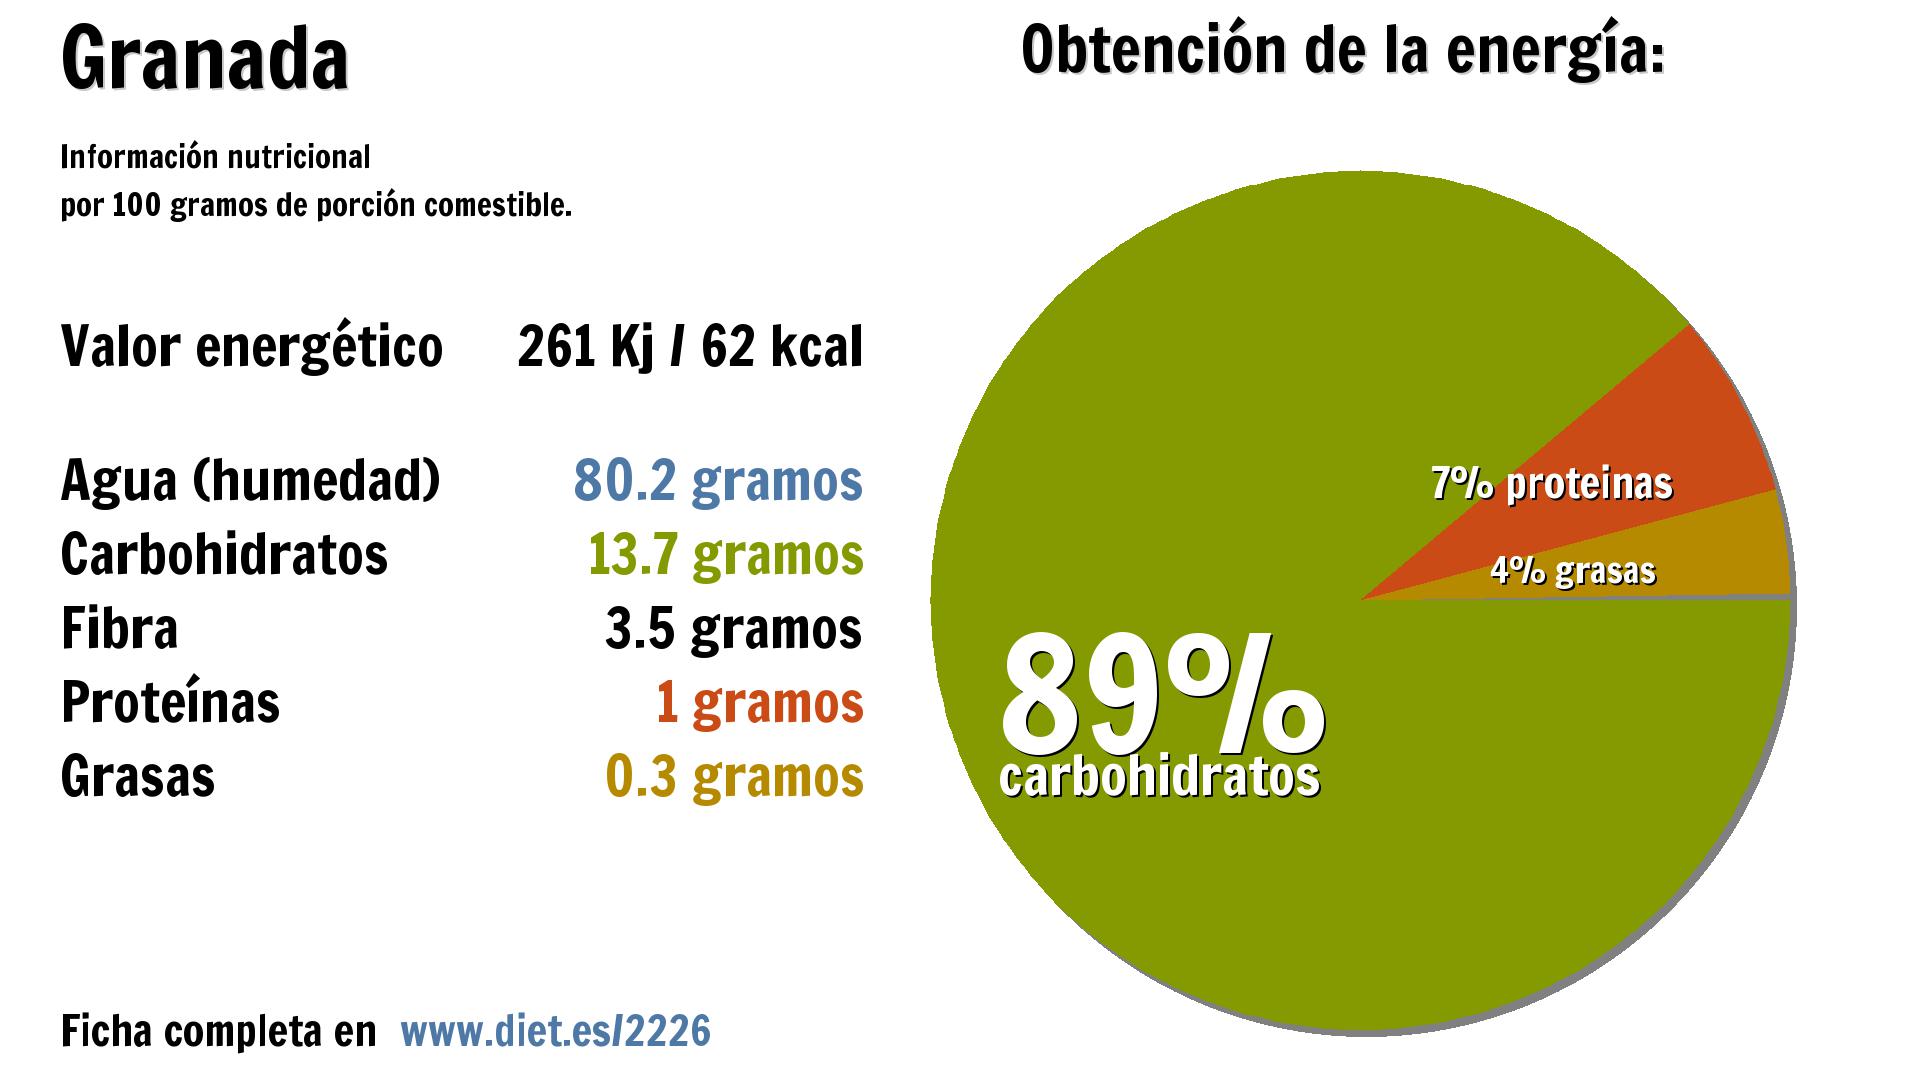 Granada: energía 261 Kj, agua 80 g., carbohidratos 14 g., fibra 4 g. y proteínas 1 g.